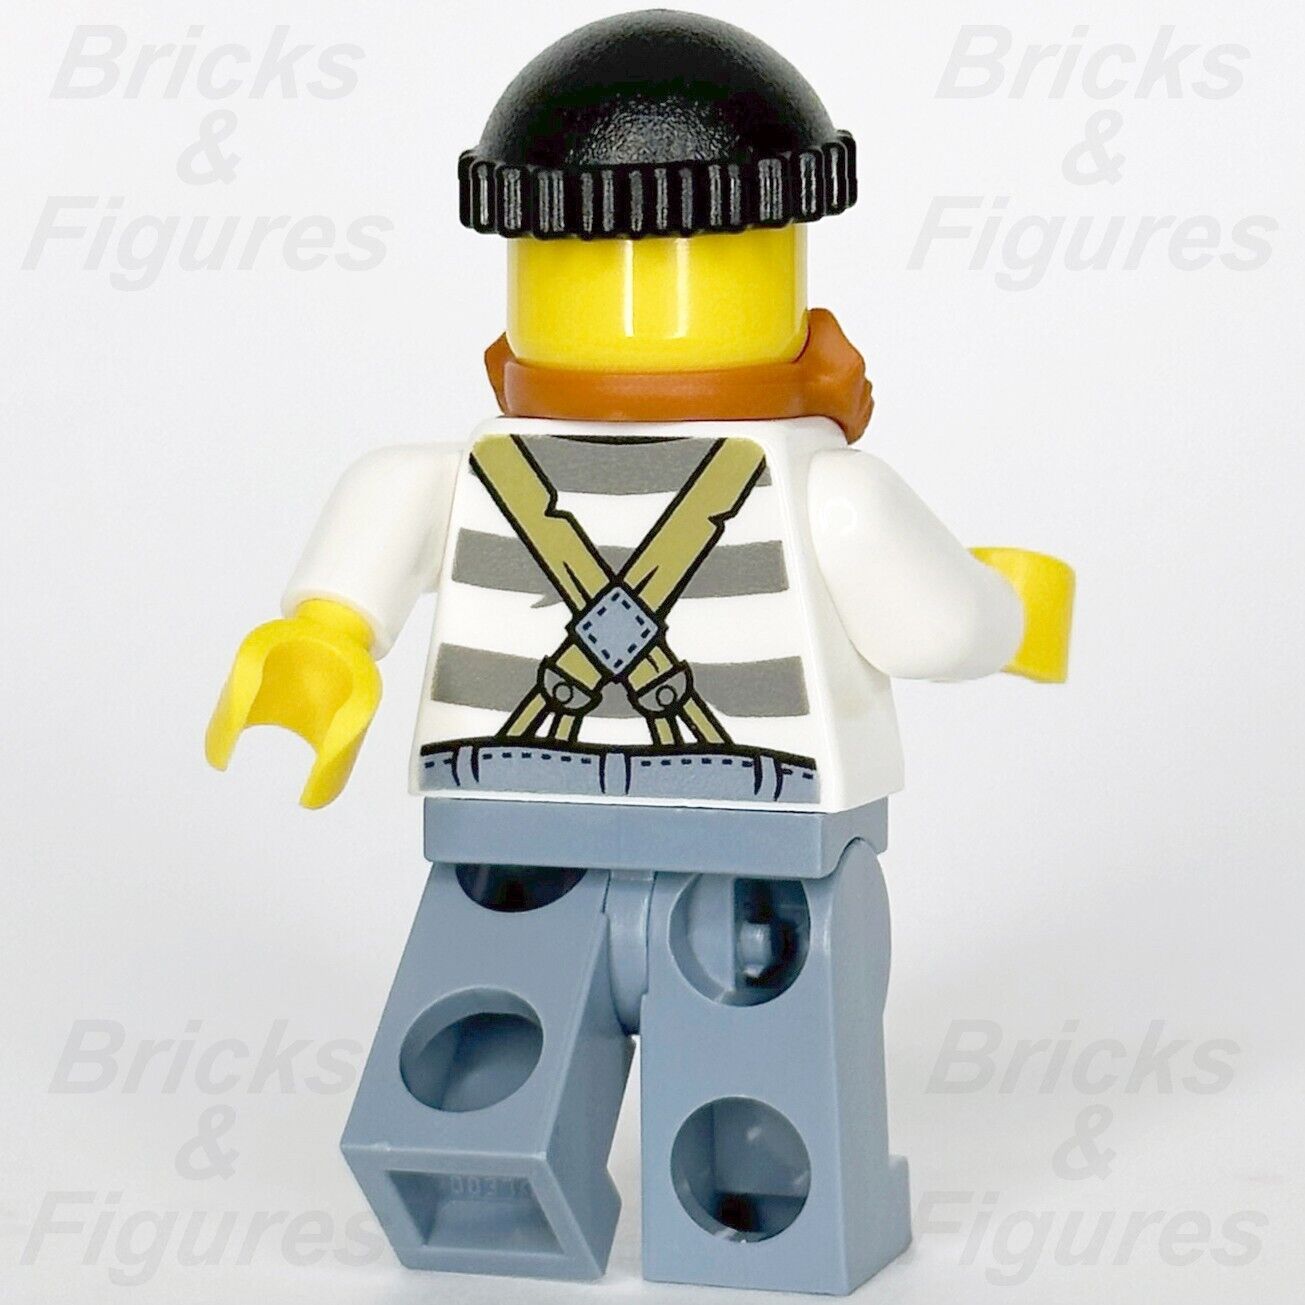 LEGO Town City Crook with Black Knit Cap Minifigure Orange Beard Police 60066 - Bricks & Figures